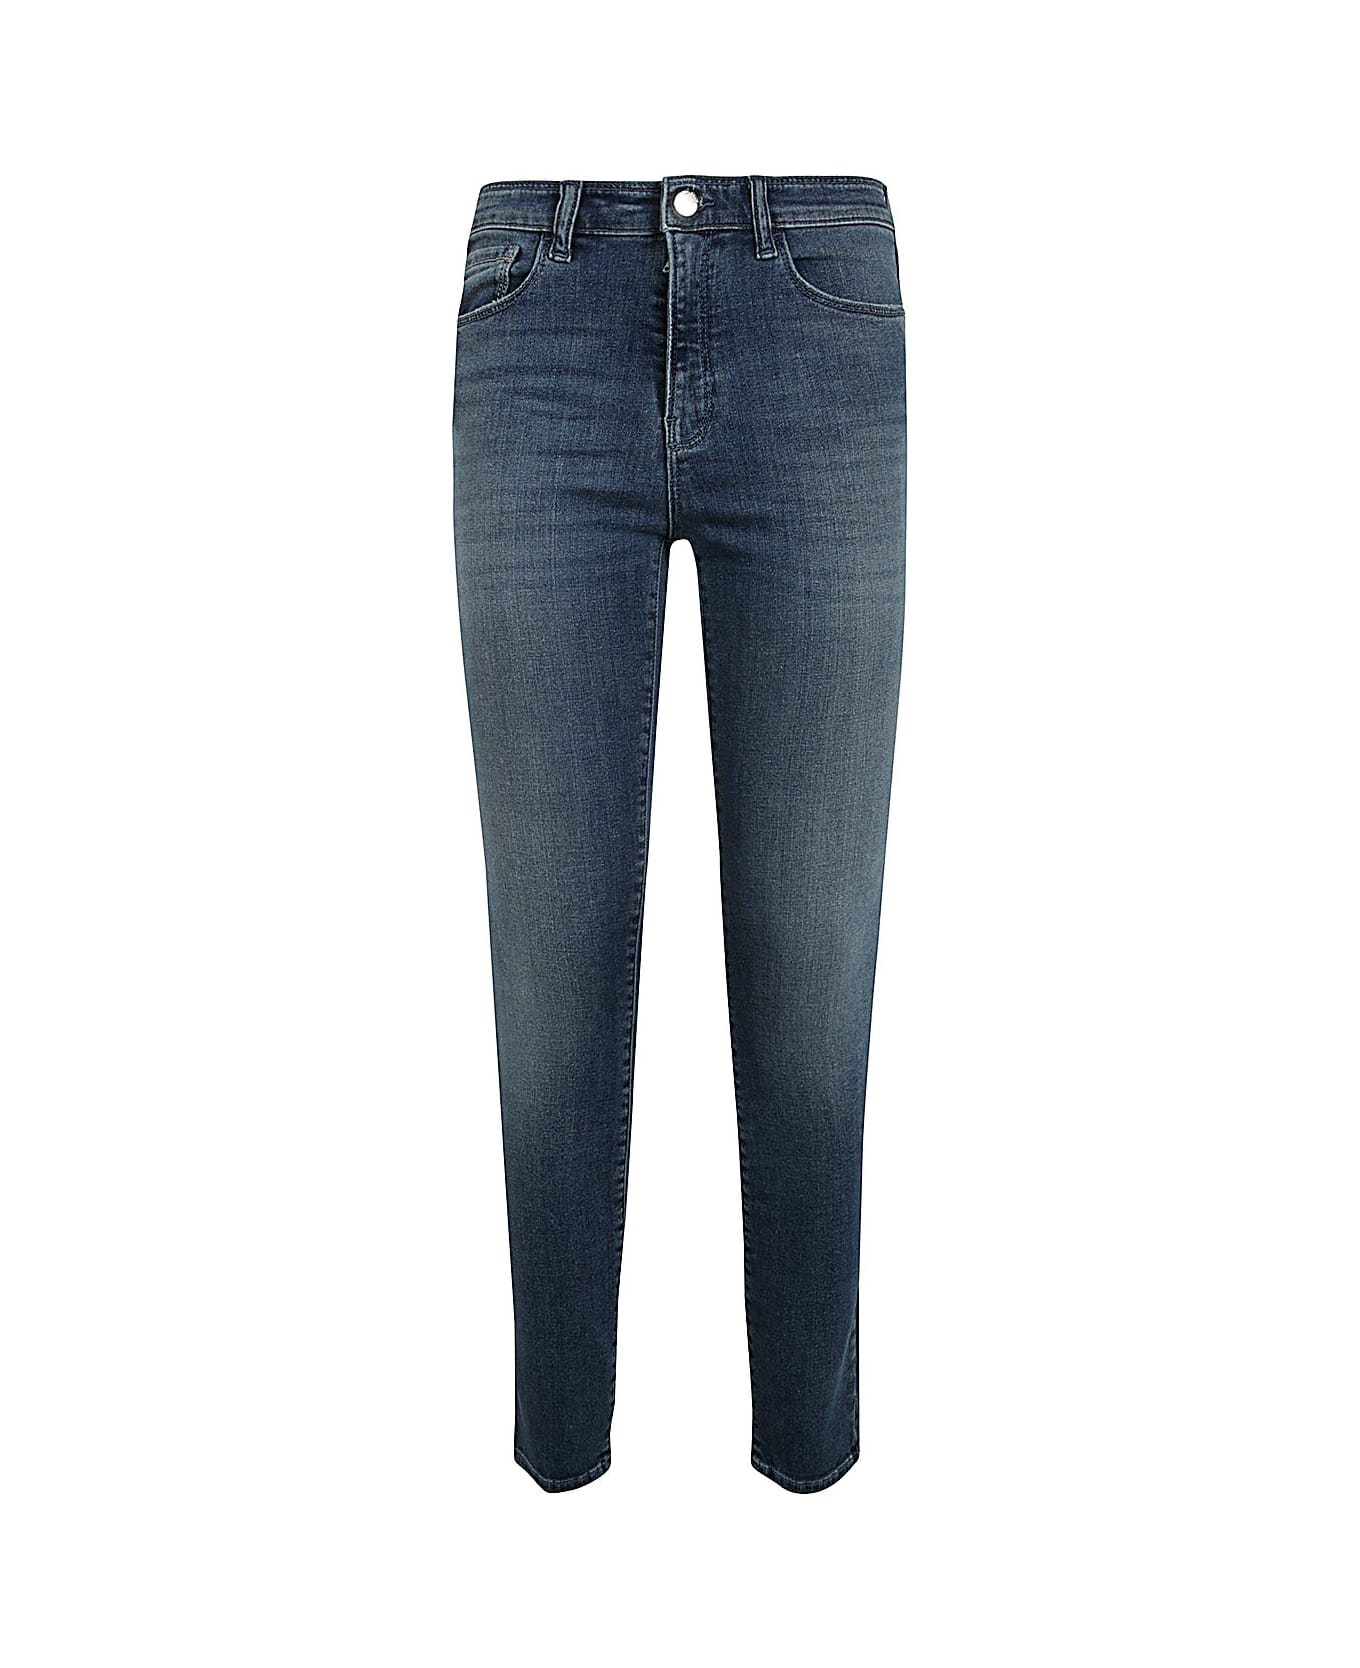 Emporio Armani Skinny Jeans - Light Denim Blue